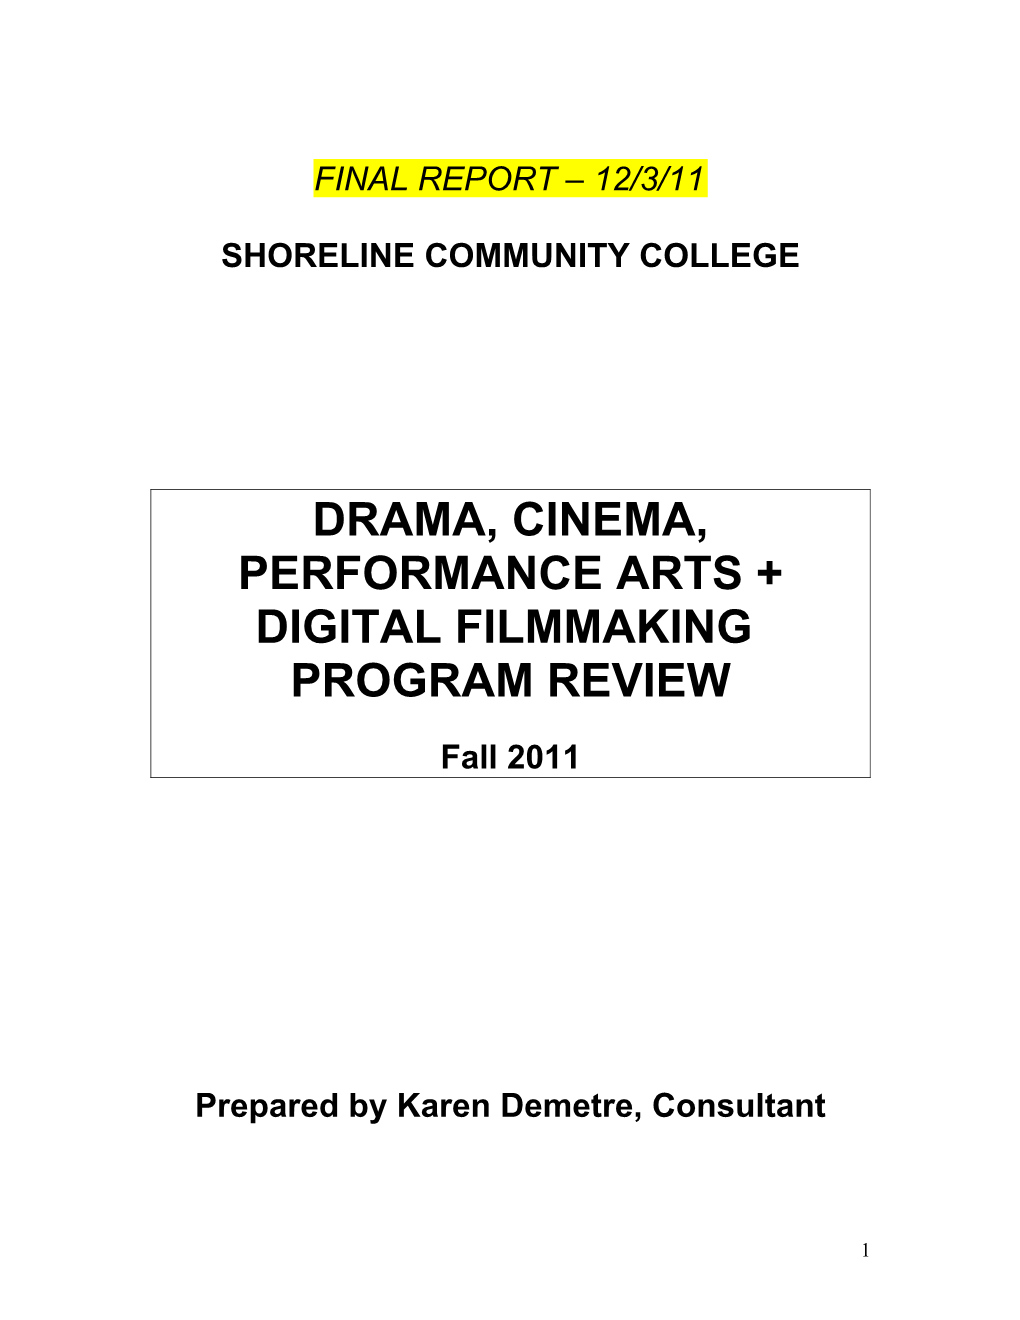 Drama, Cinema, Performance Arts + Digital Filmmaking